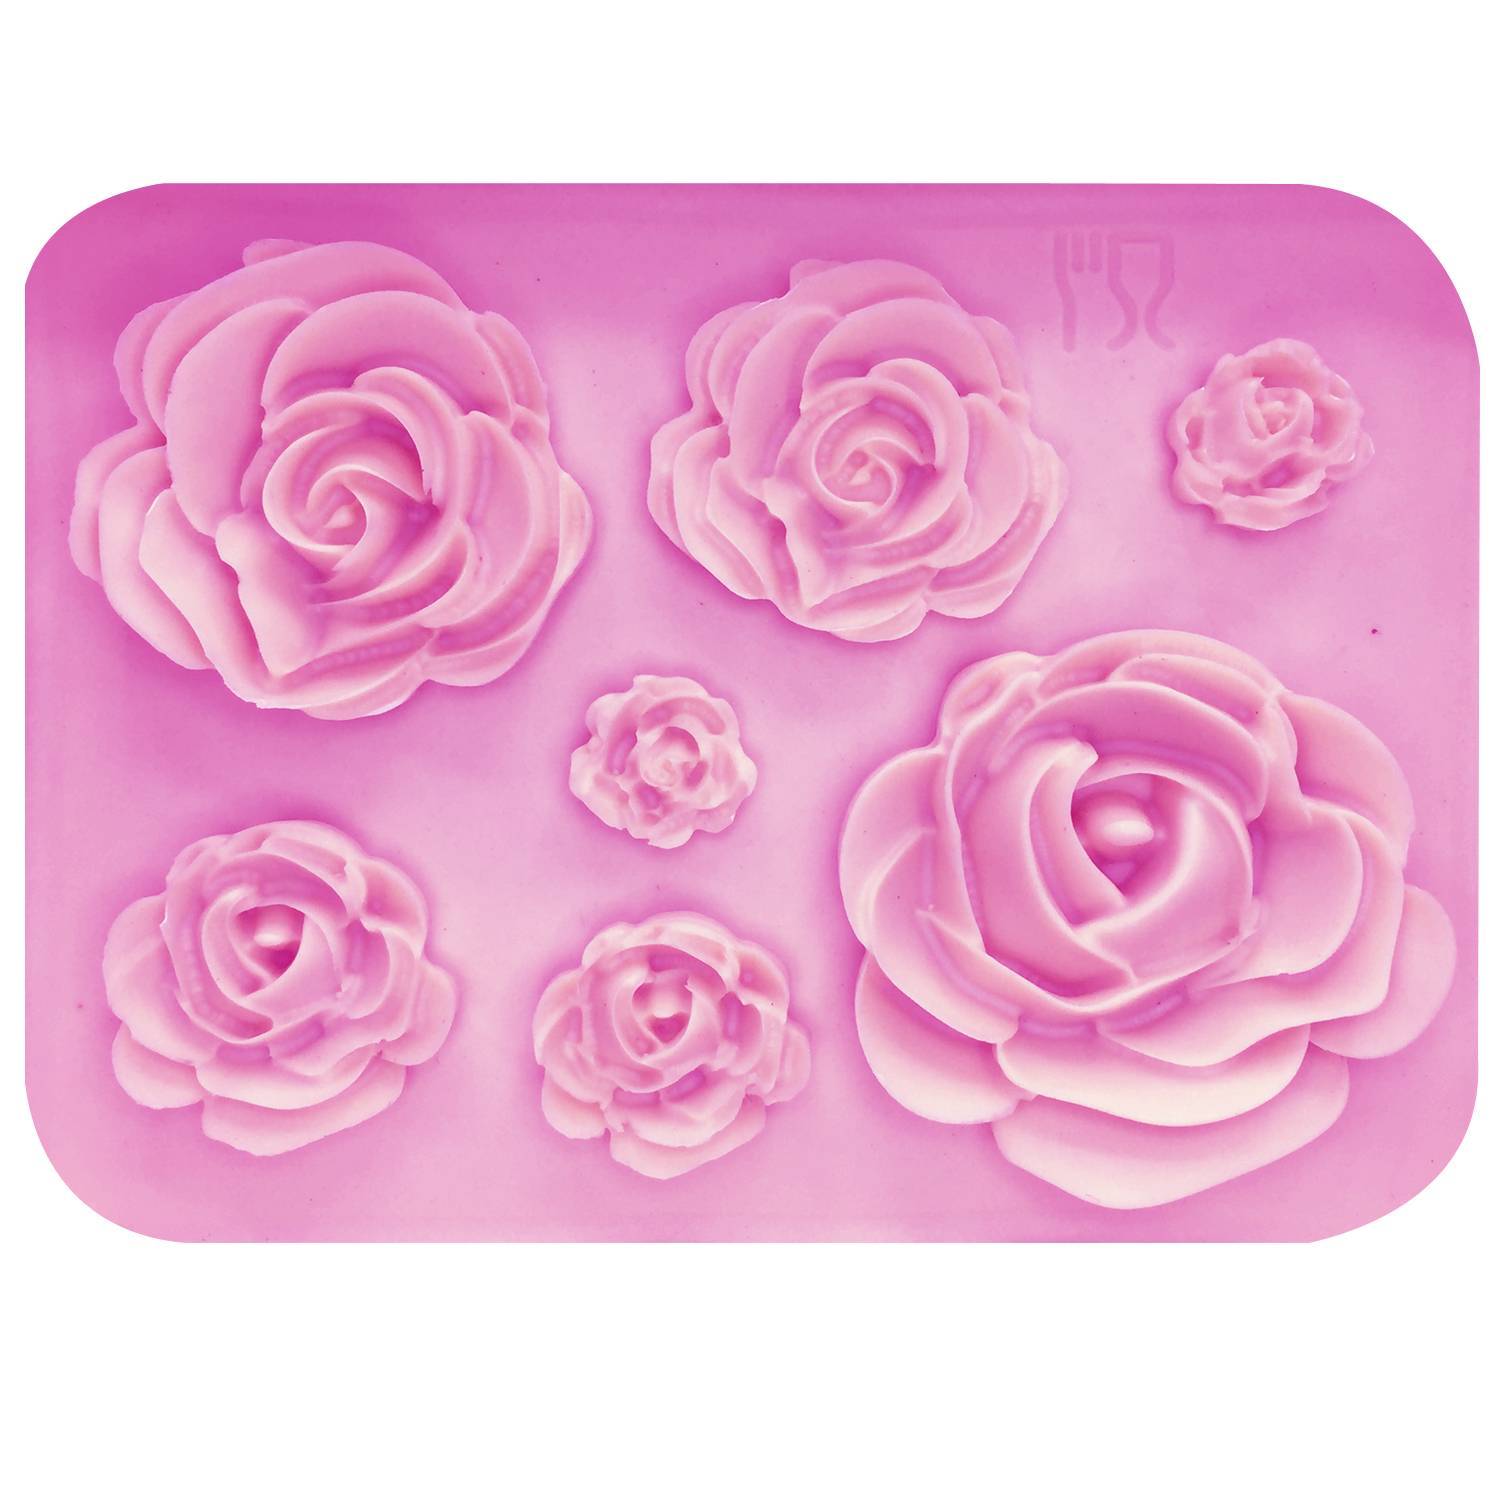 Rose Flowers Shaped Silicone Cake Mold